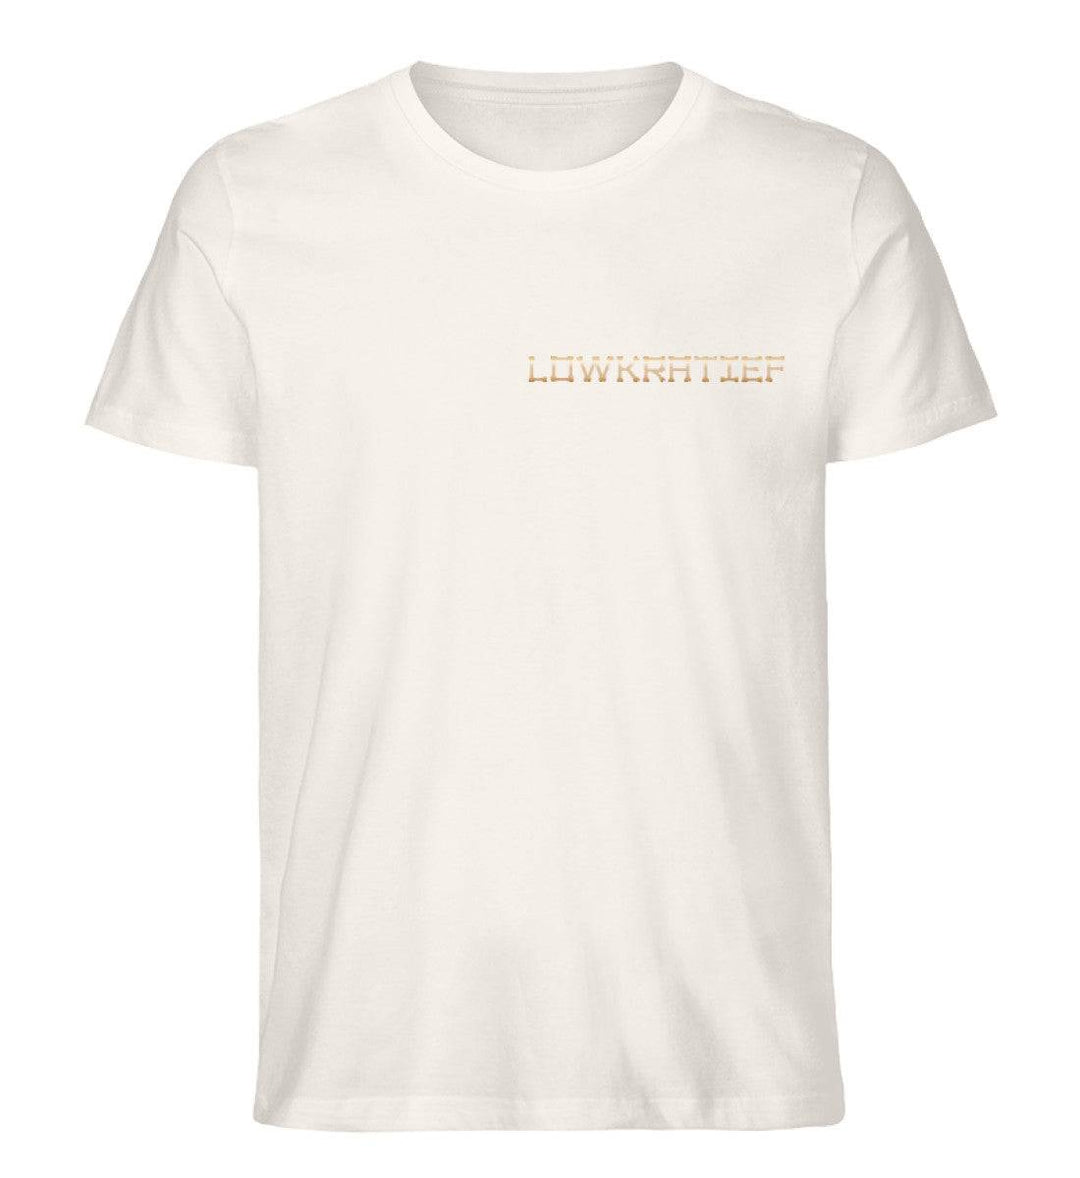 Stoneracer Shirt - LOWKRATIEF CLOTHING